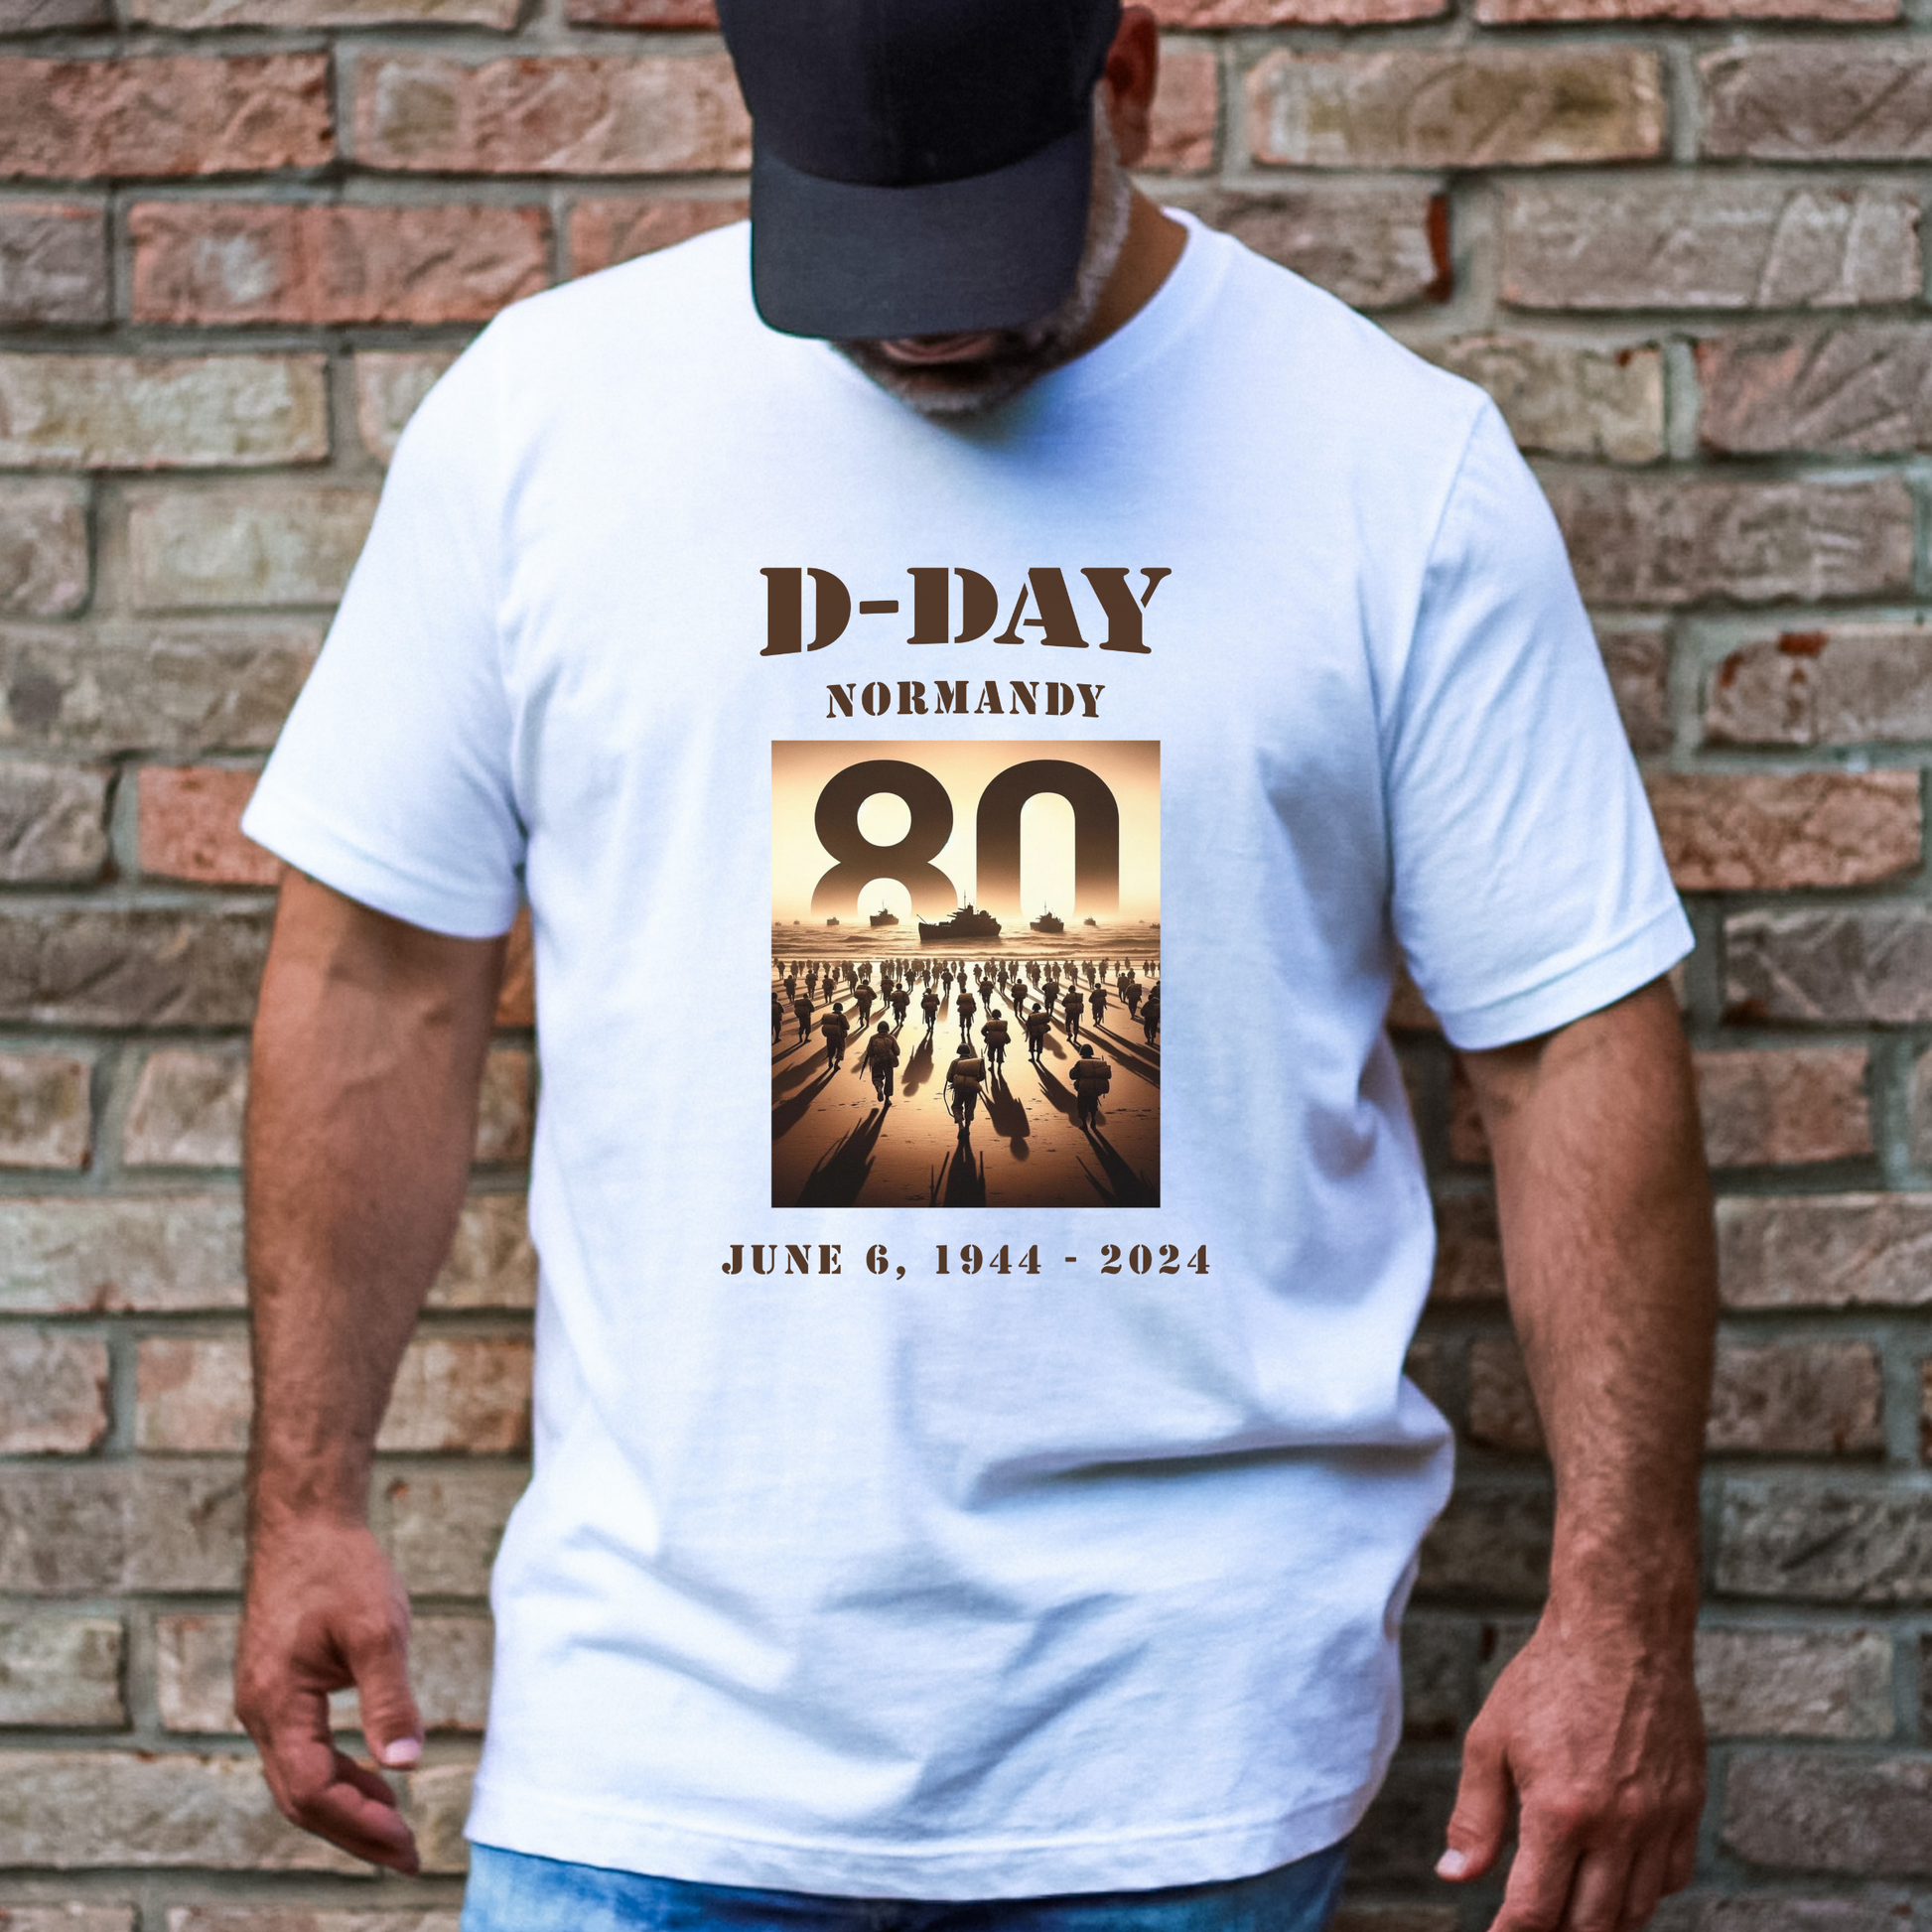 D-Day Normandy 80th Anniversary T-Shirt - Military History Tee - Mardonyx T-Shirt XS / White